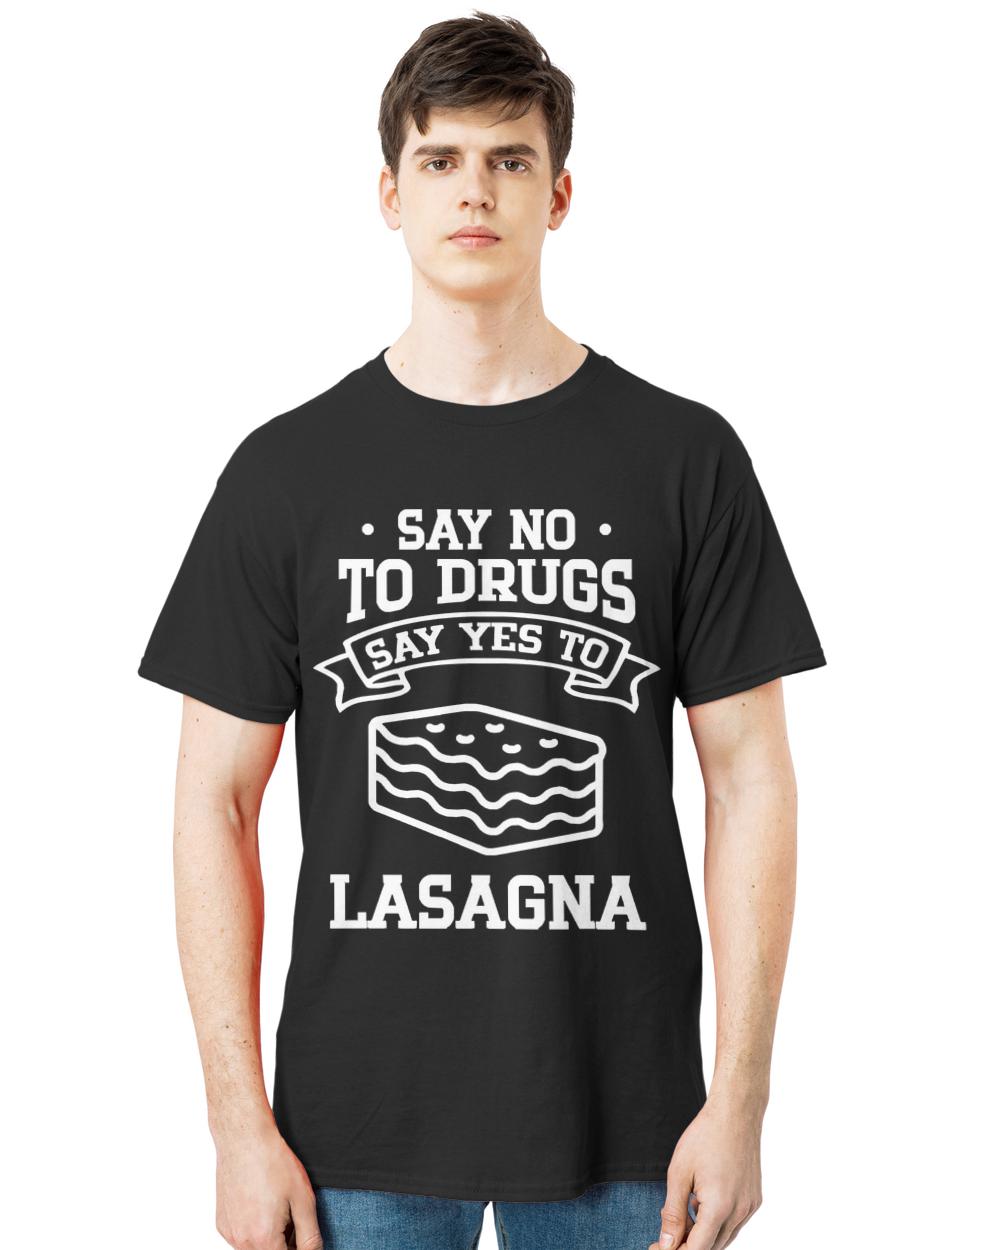 Say No To Drugs T- Shirt Say No to Drugs Say Yes to Lasagna T- Shirt